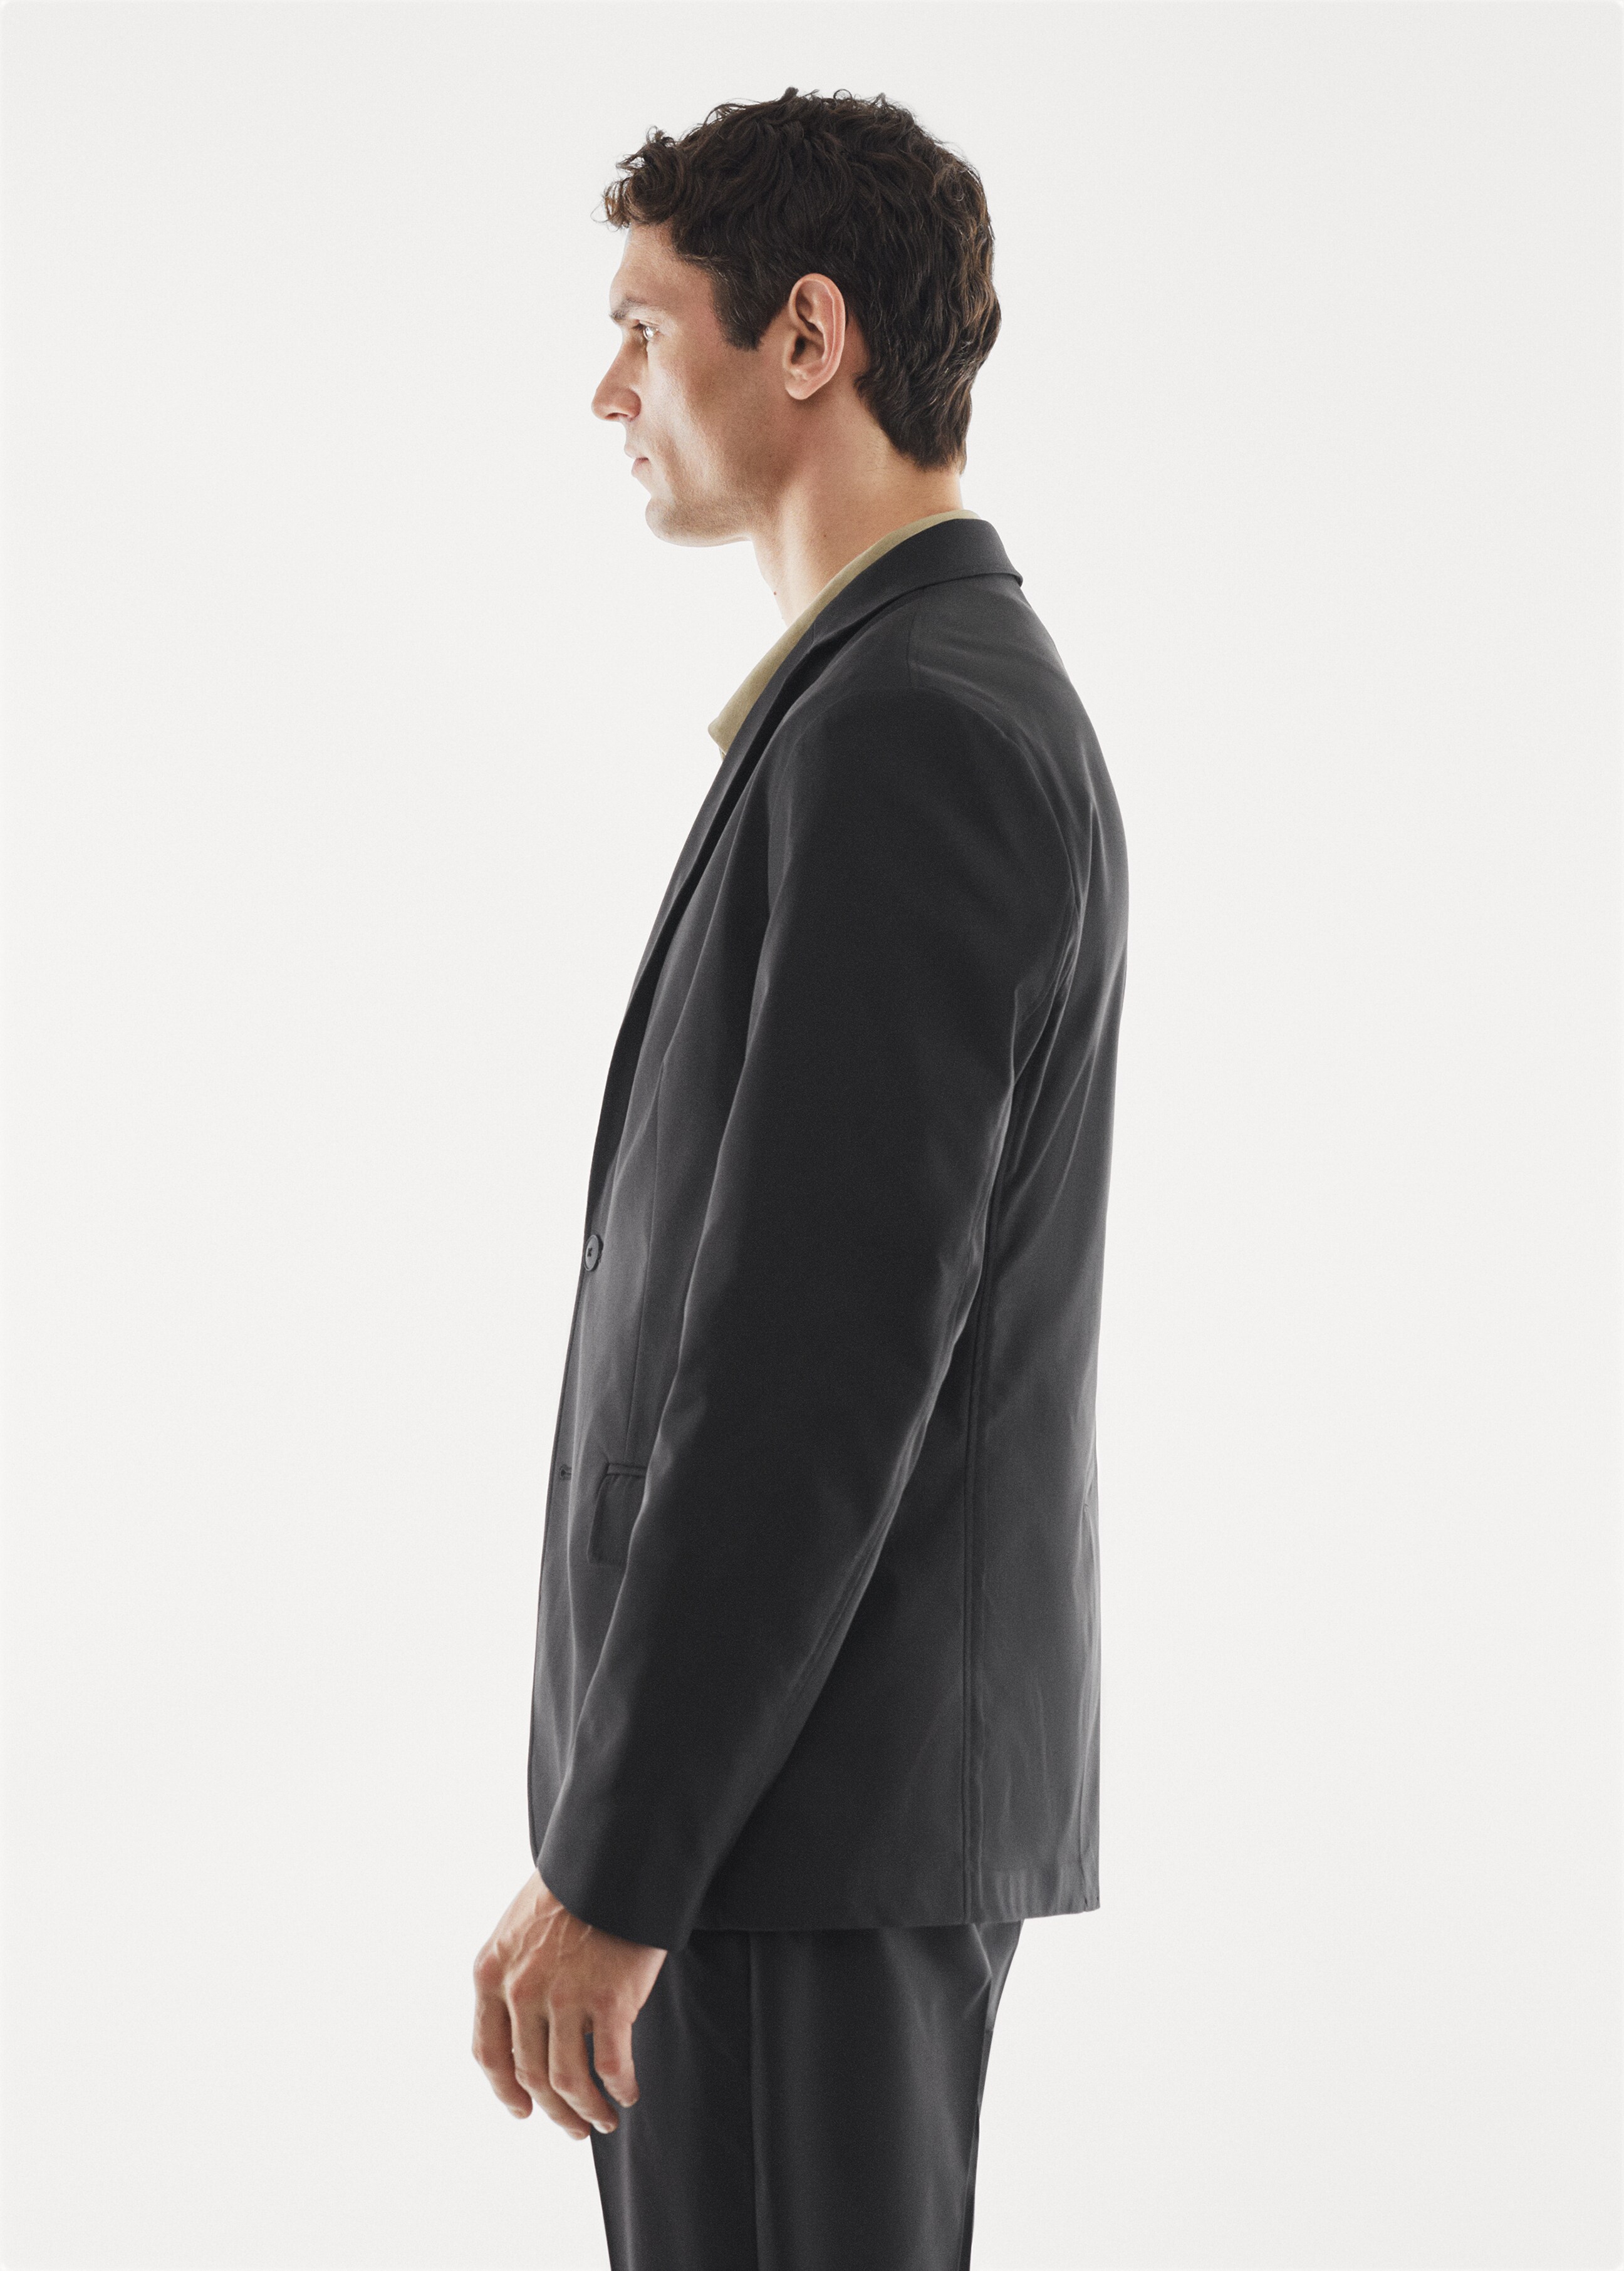 Slim-fit technical suit blazer - Details of the article 6